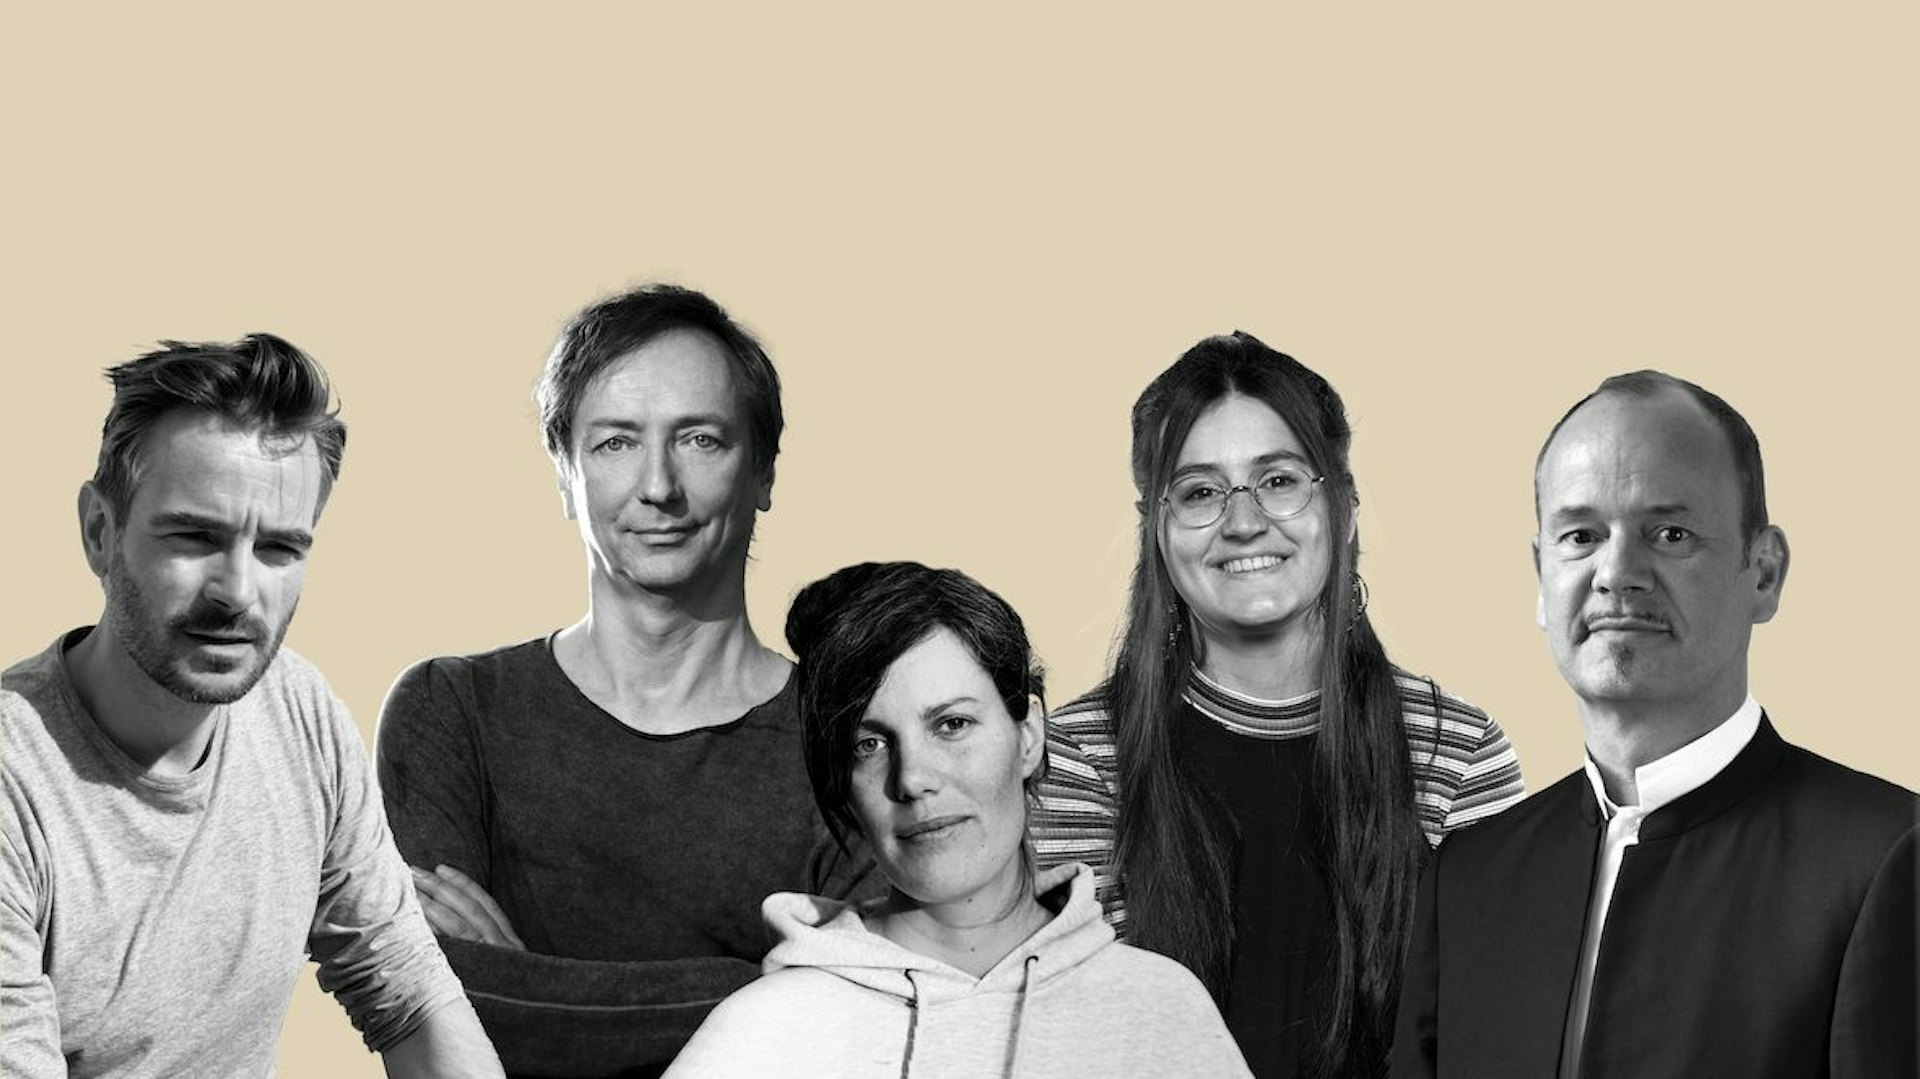 Le jury: Mark Bächle, Volker Bertelmann, Sophie Linnenbaum, Gabrielle Selnet, Frank Strobel